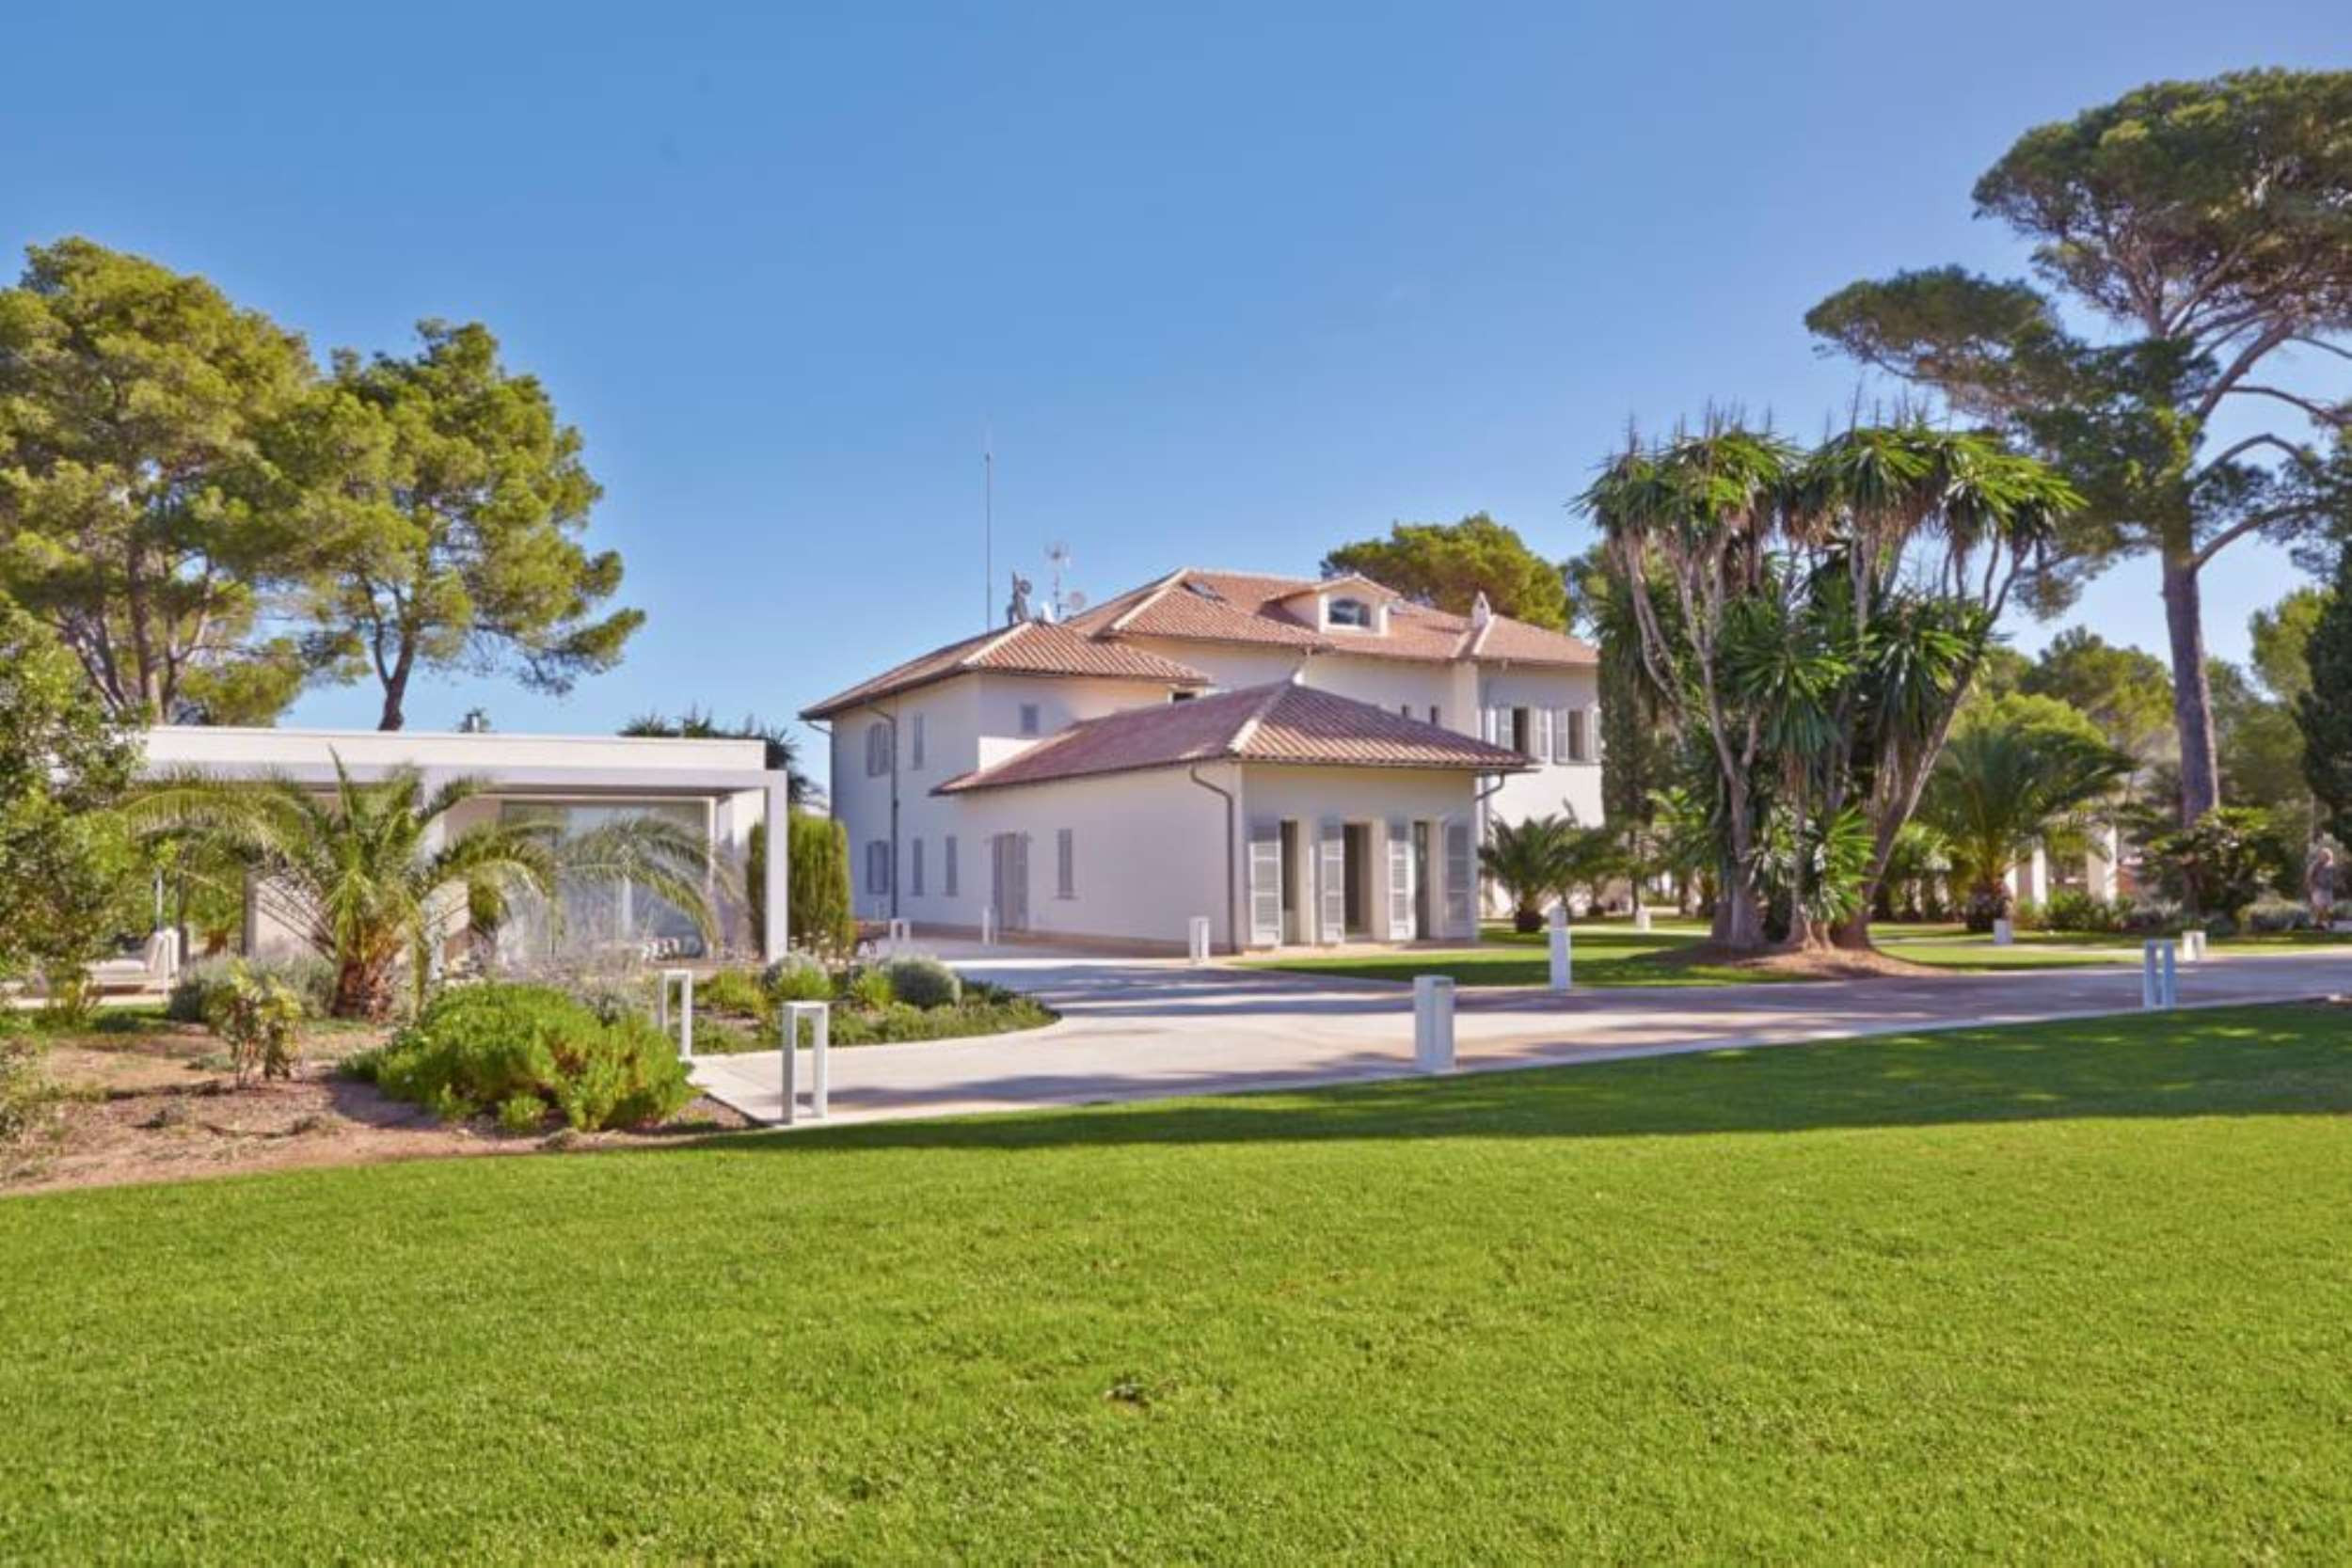 Villa Leones is a luxury villa situated in Mal Pas, Alcudia